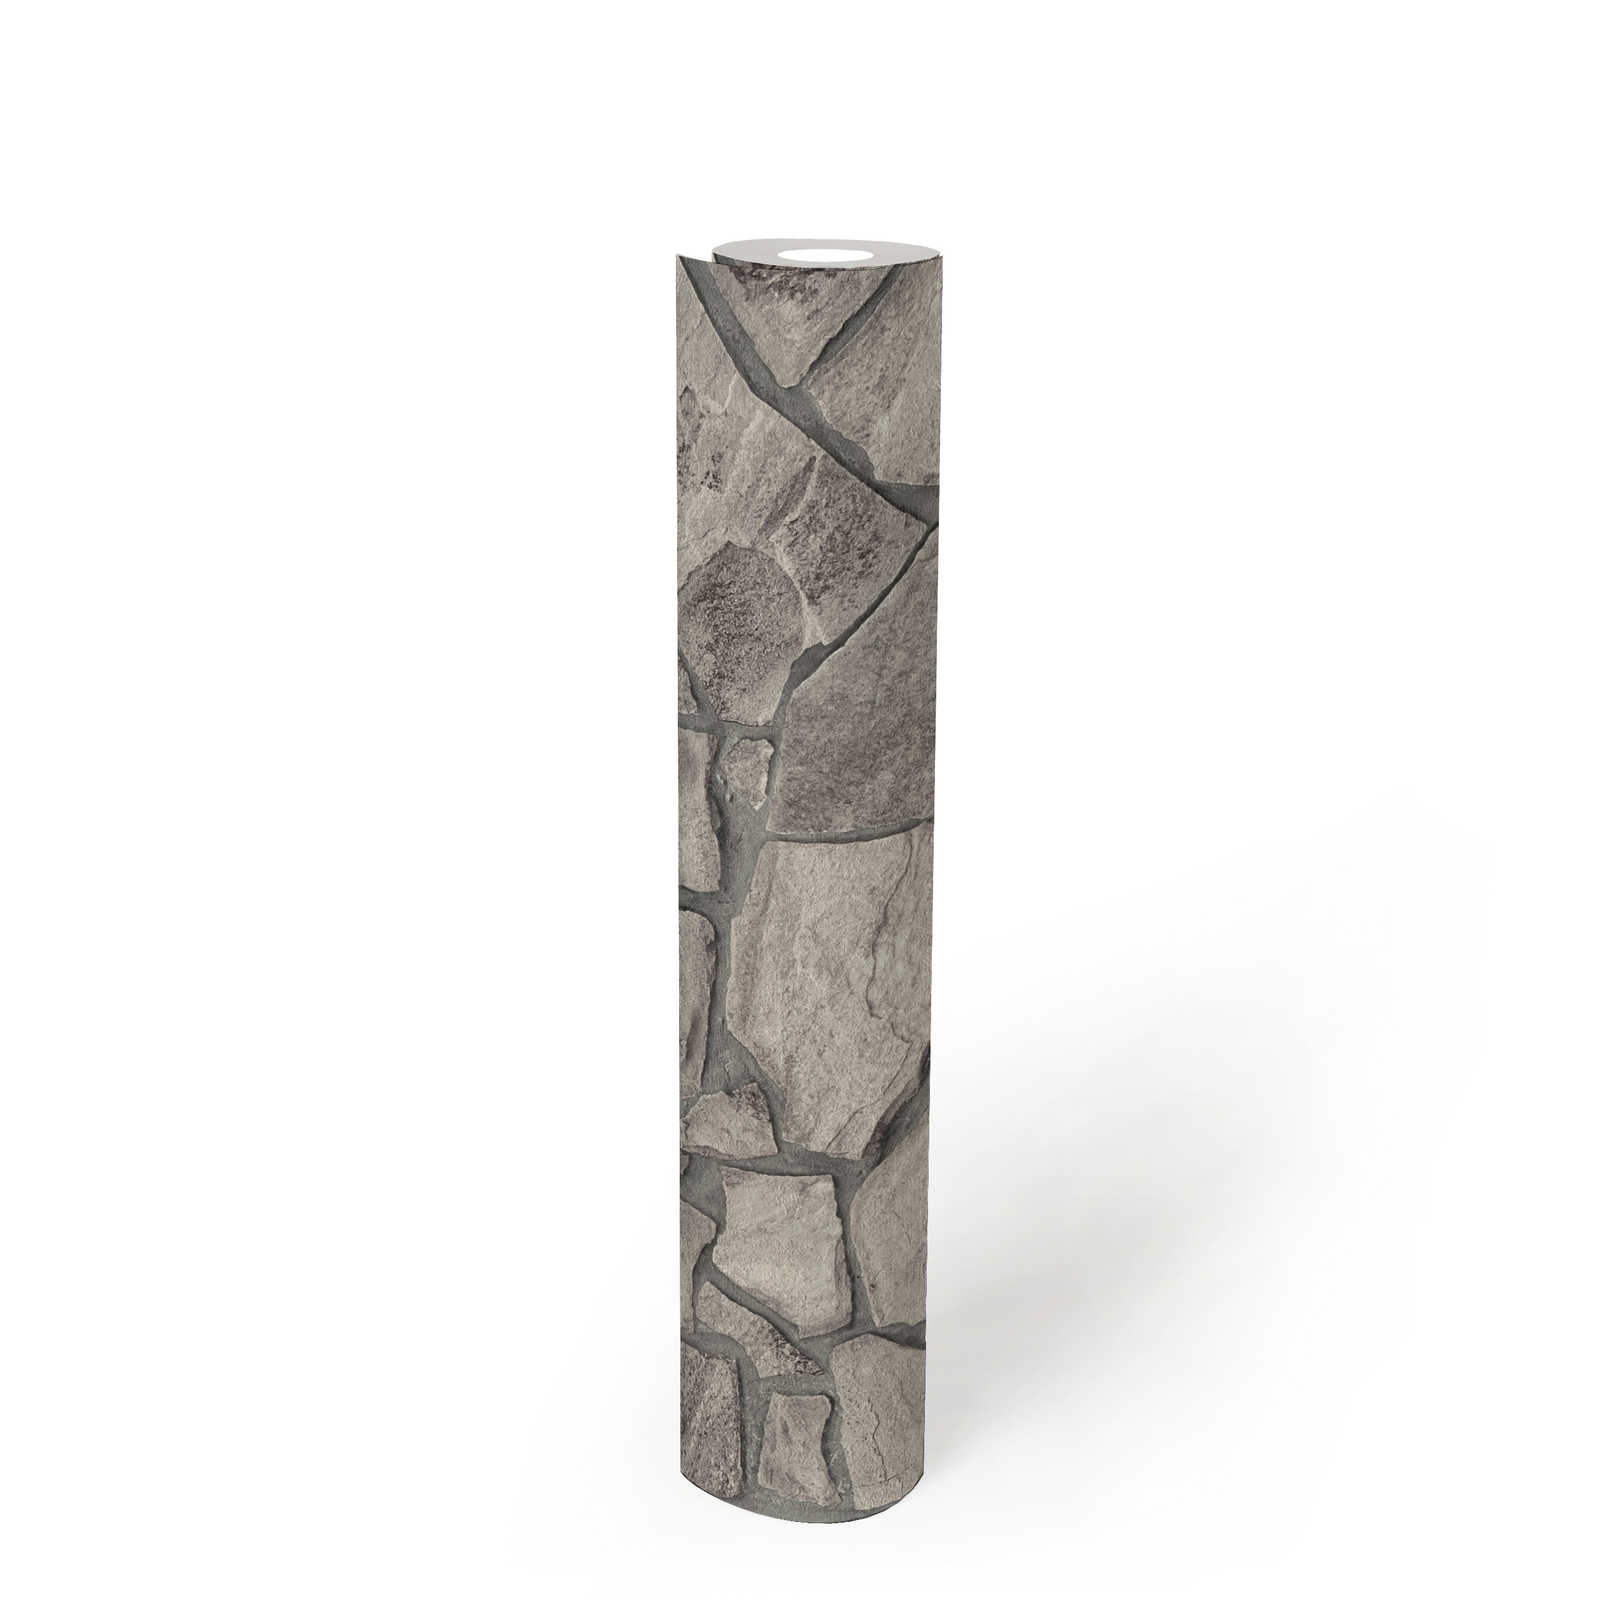             Nature stone masonry non-woven wallpaper 3D-optics - grey, Grey
        